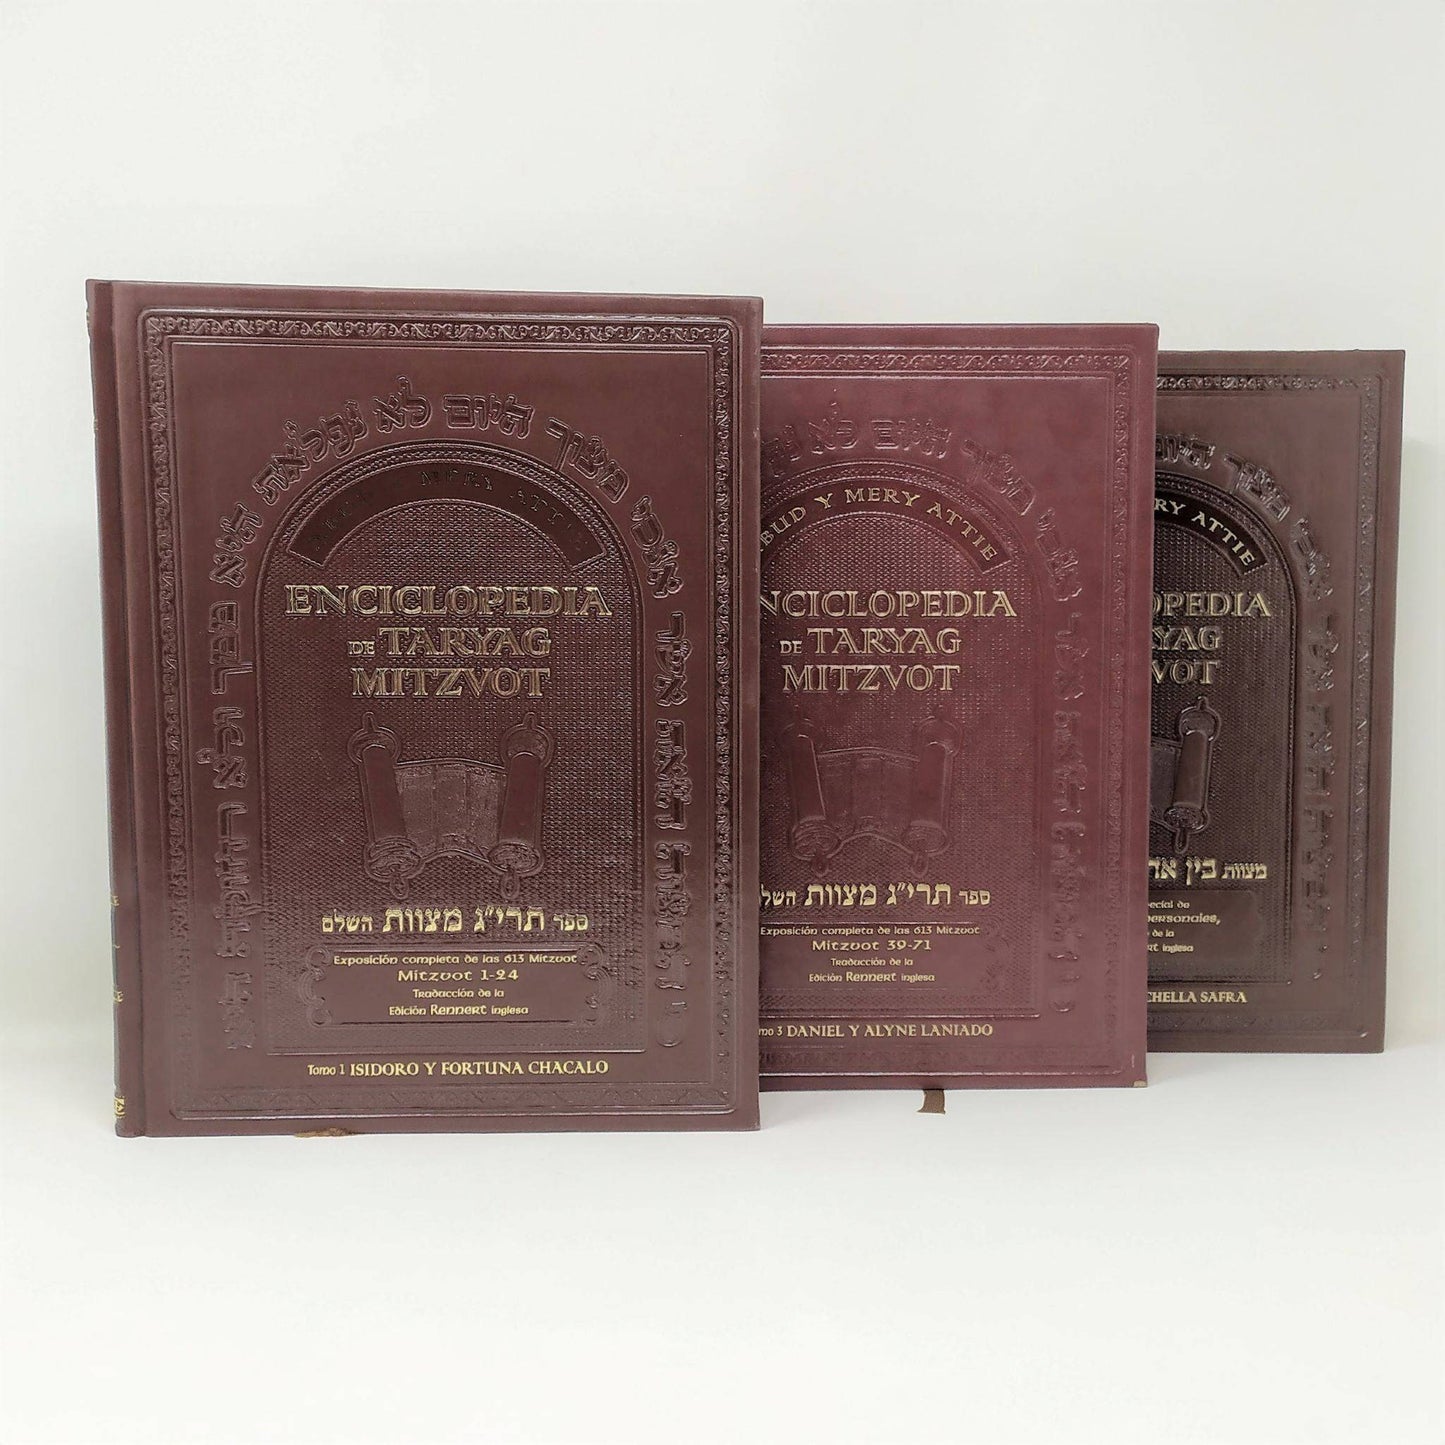 Enciclopedia Taryag Mitzvot Juego de 3 Tomos - Libreria Jerusalem Centro